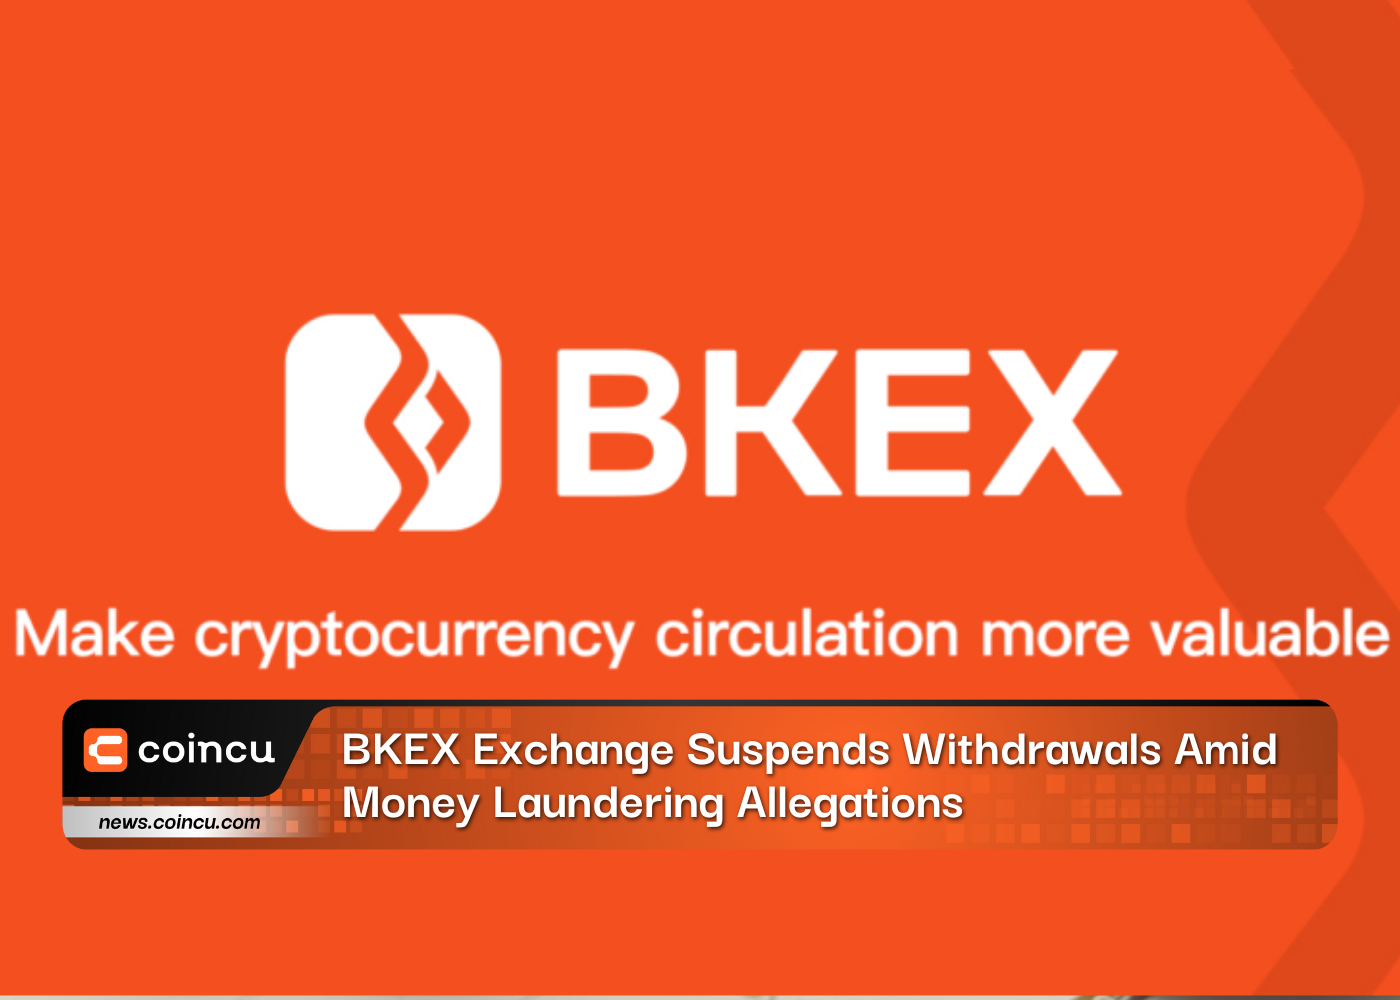 BKEX Exchange Suspends Withdrawals Amid Money Laundering Allegations